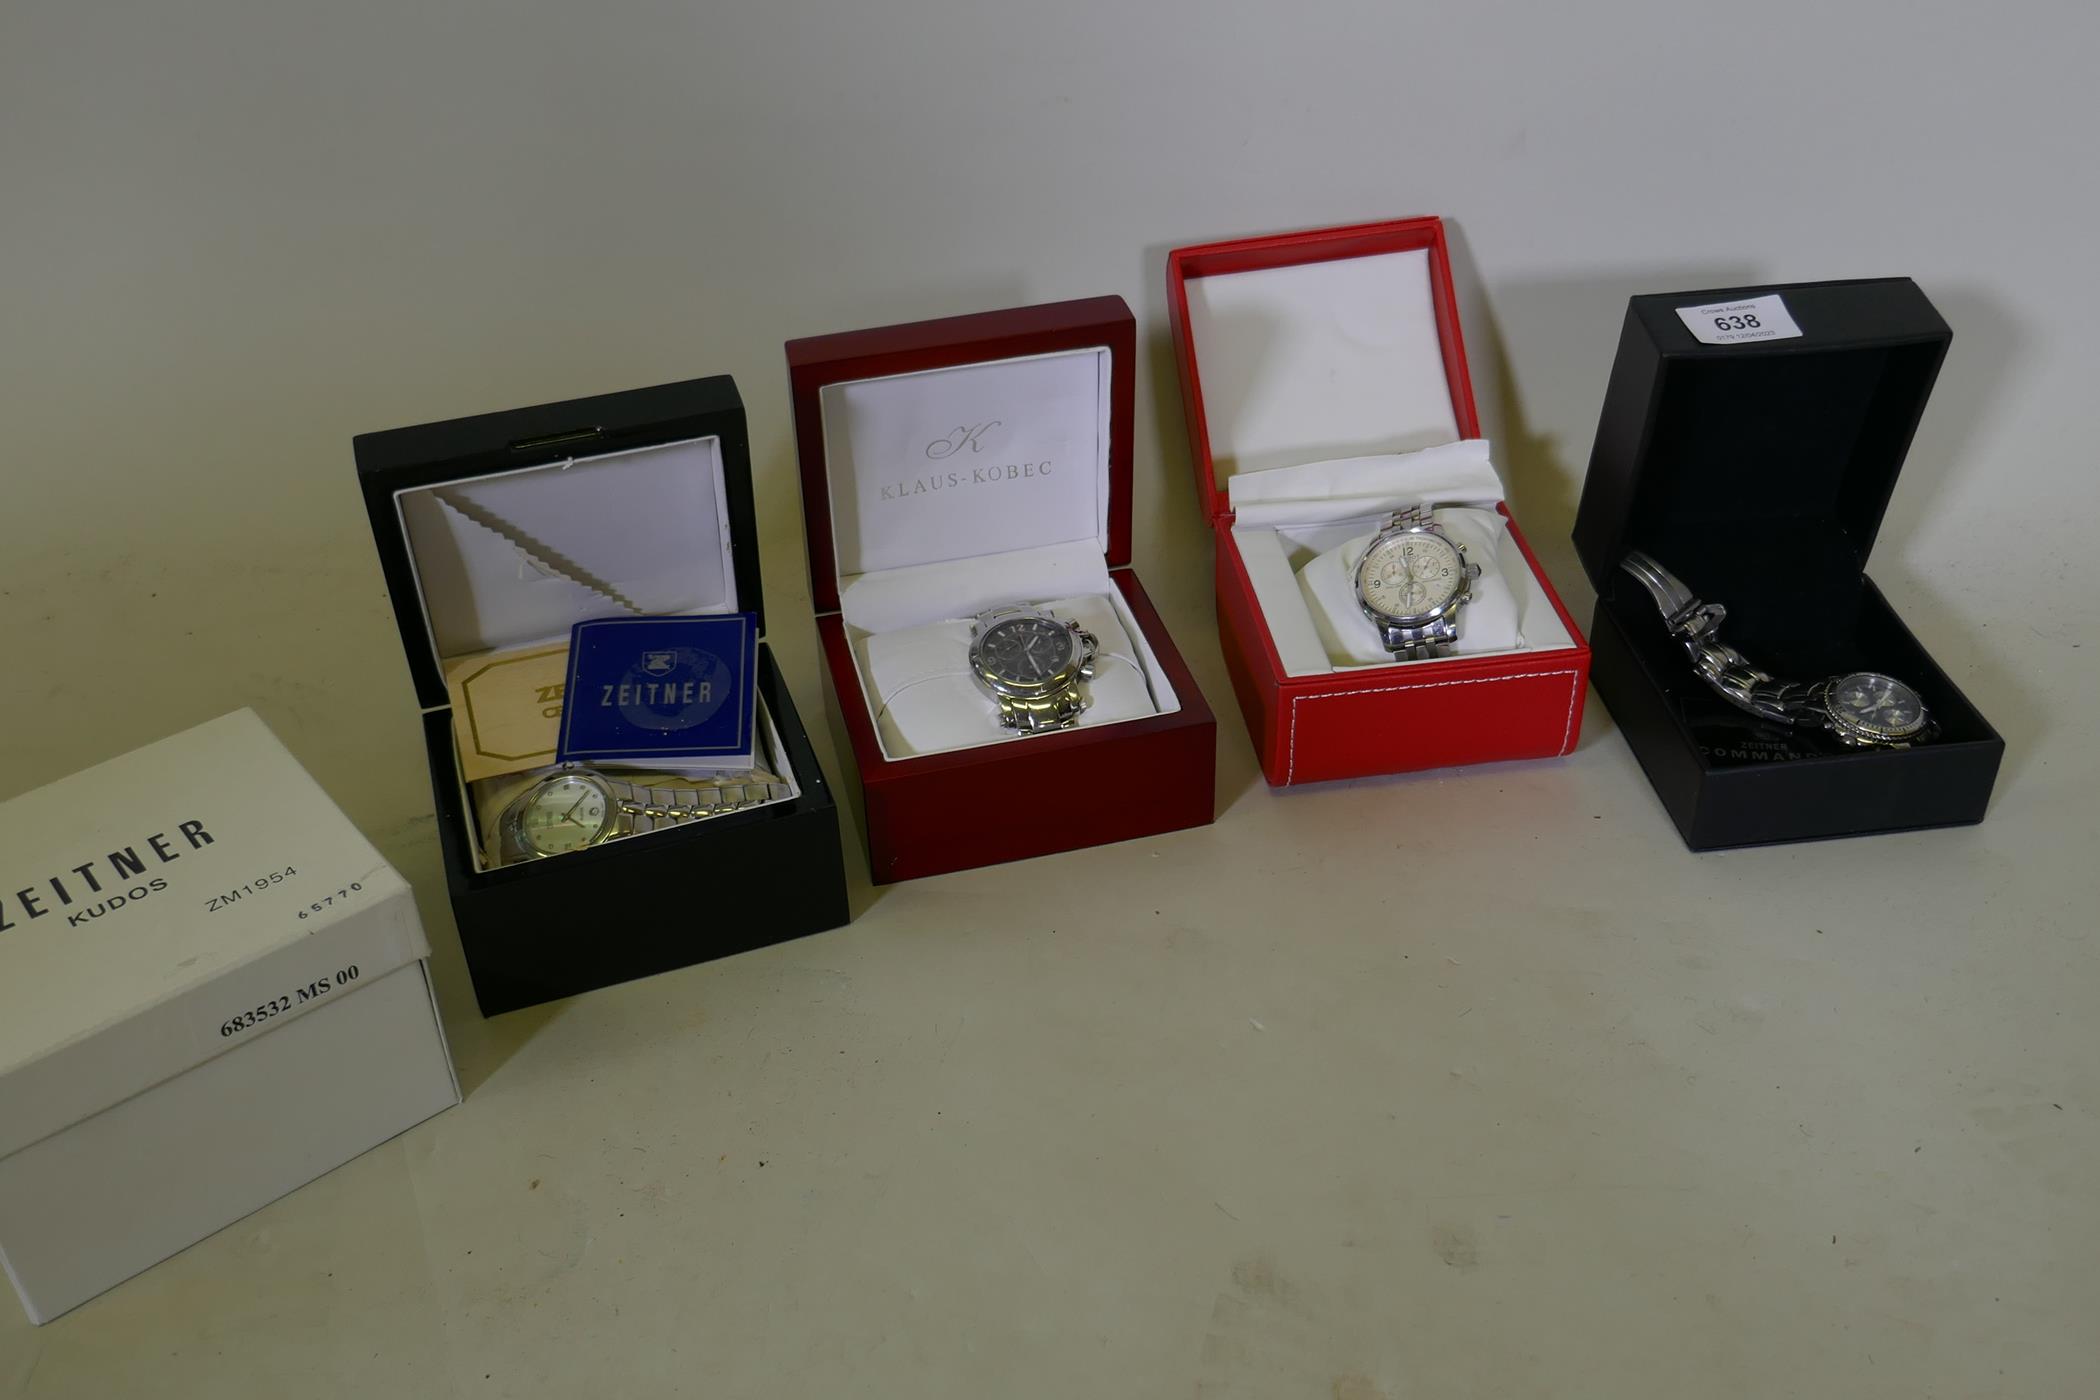 Four gentleman's wristwatches by Zeitner, Tissot and Klaus-Kobec